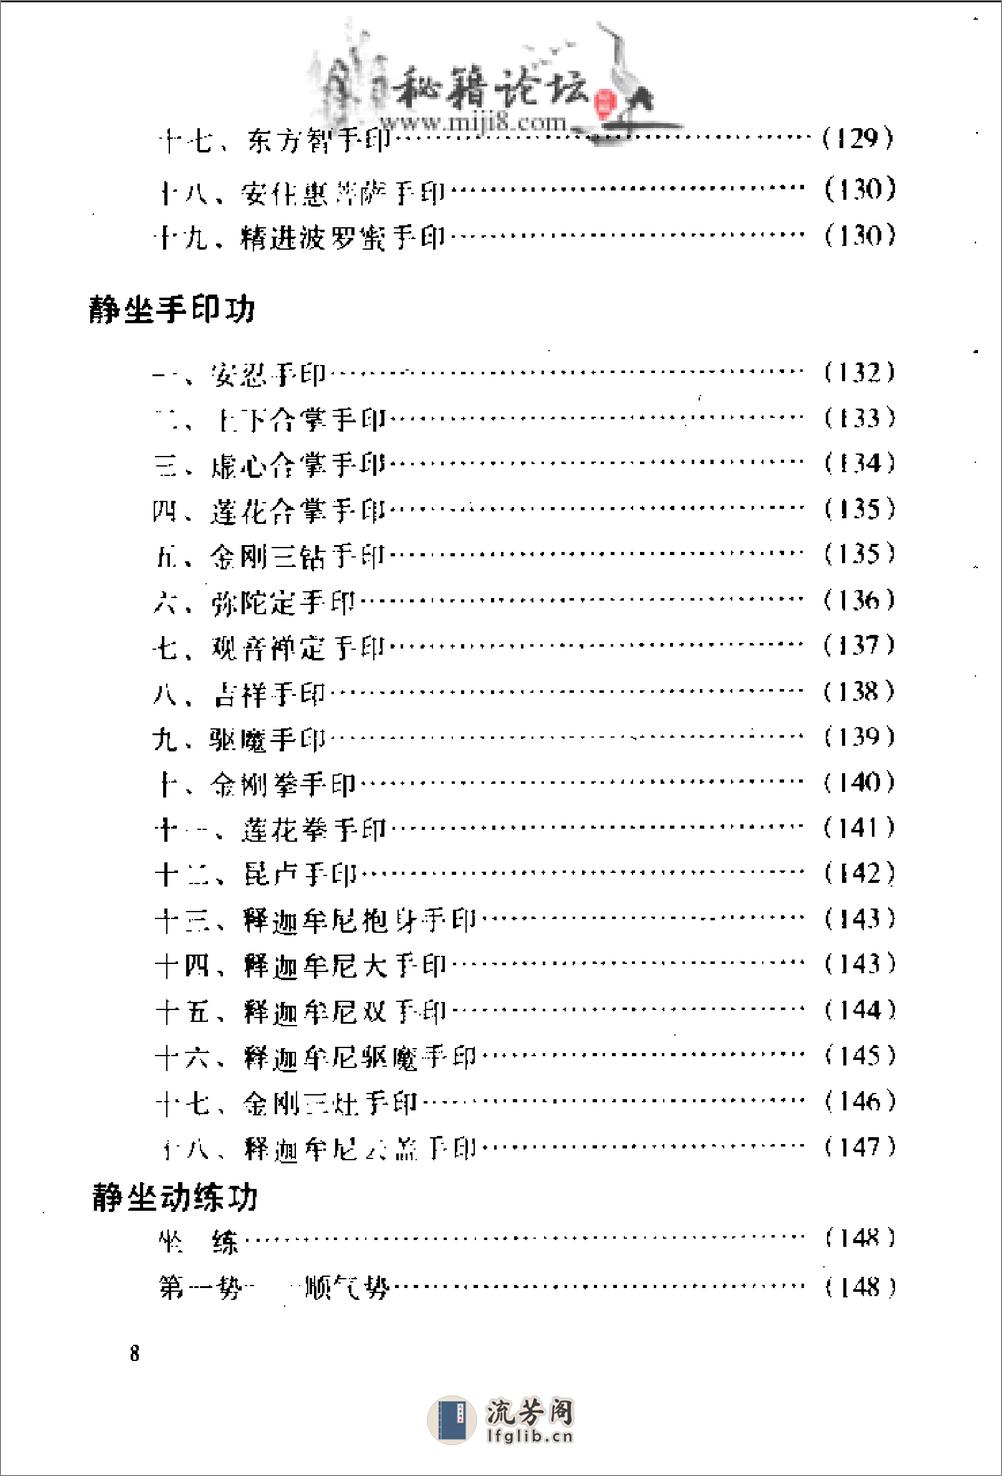 QM98内气外放功(1) - 第8页预览图